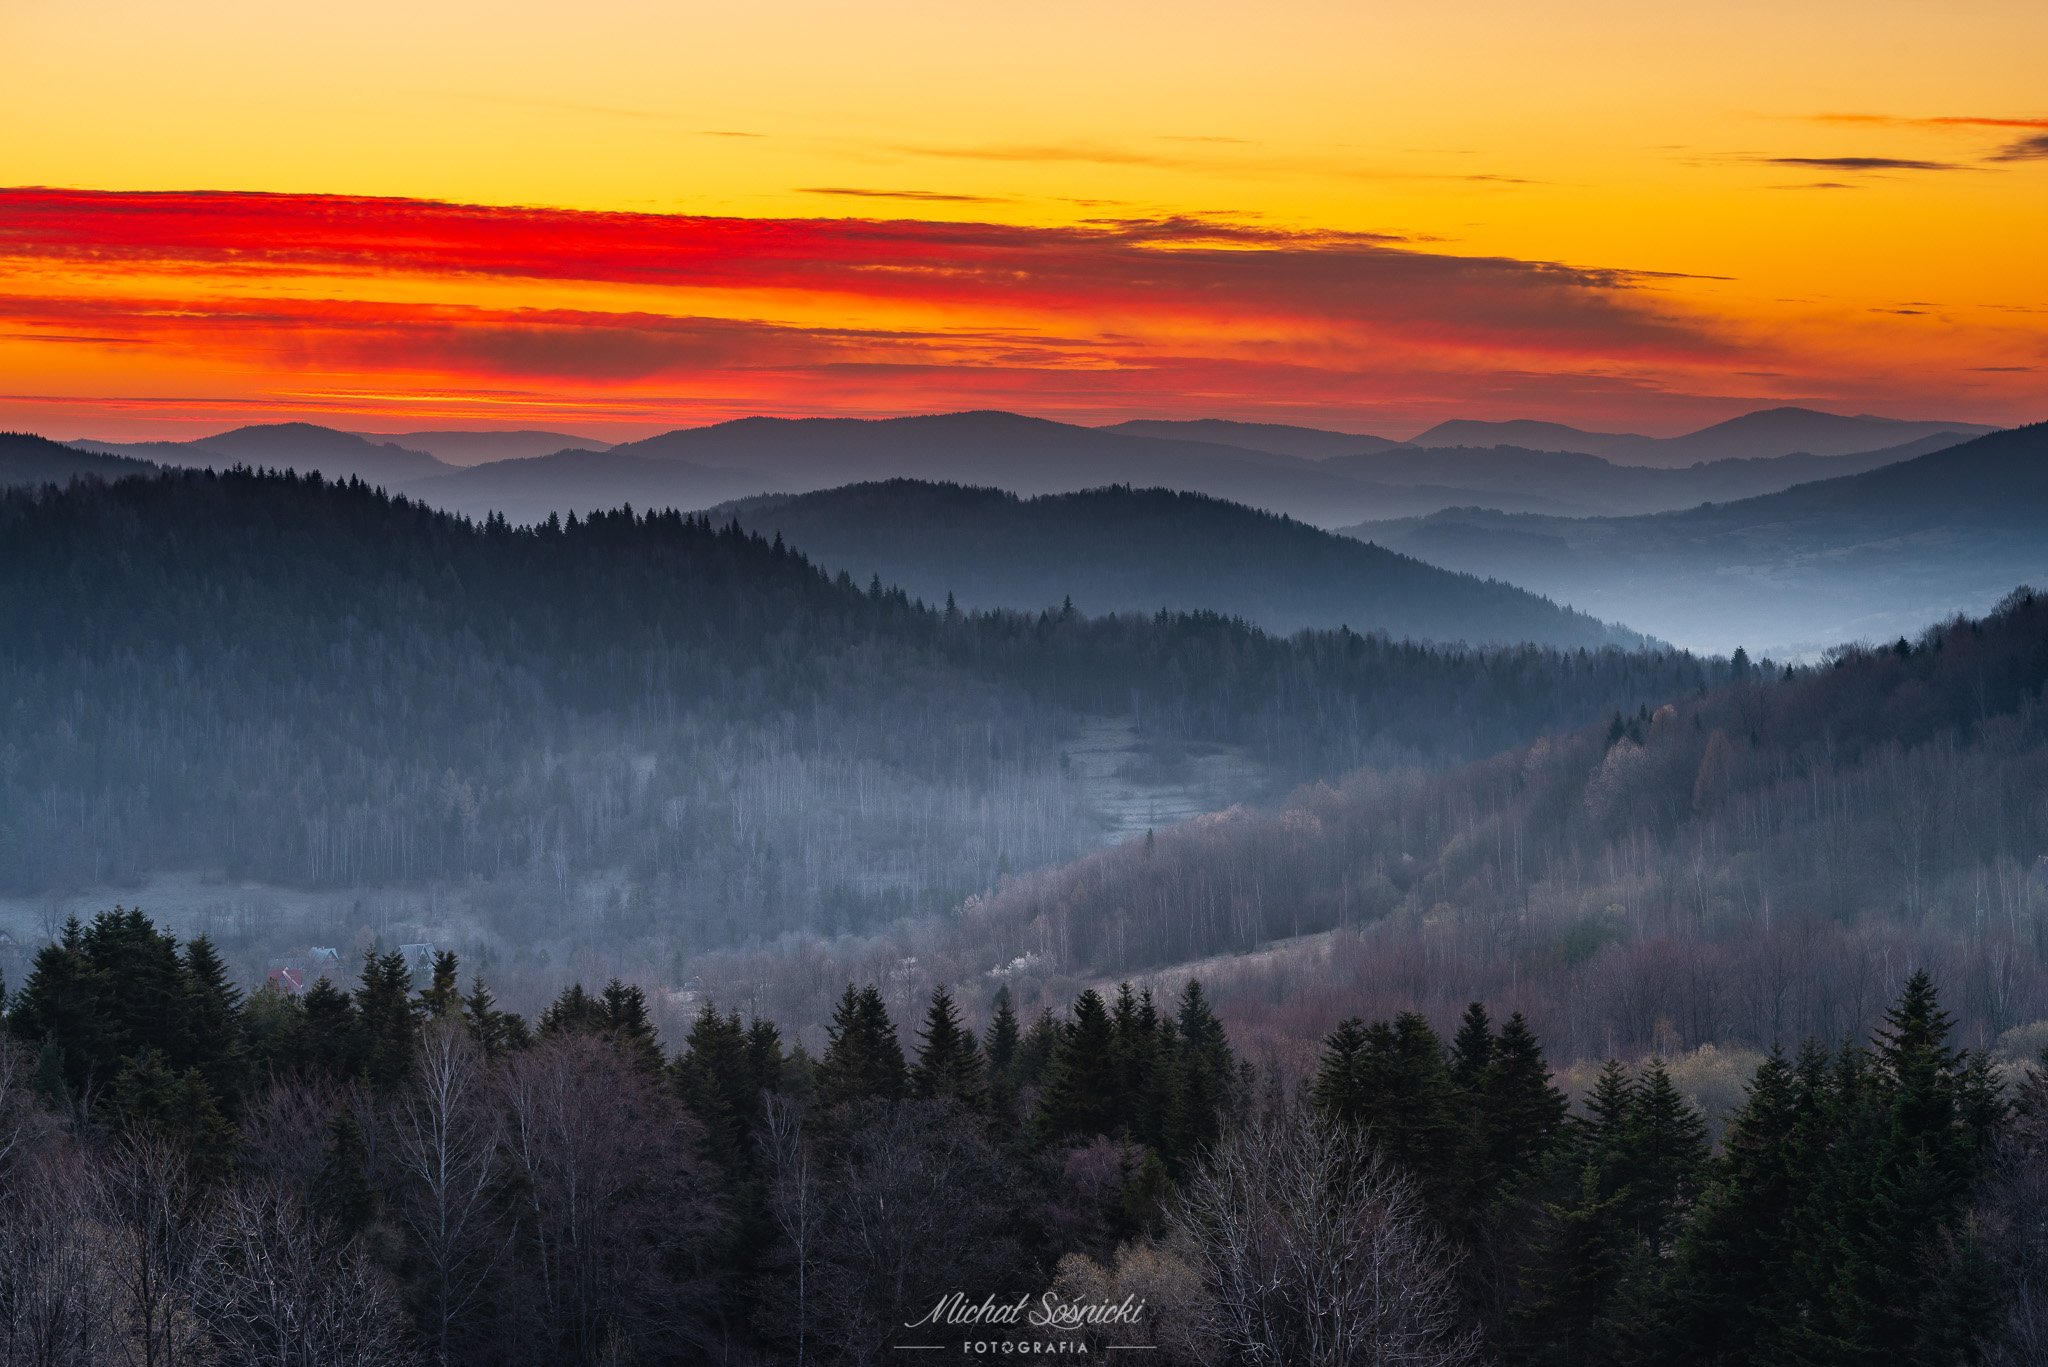 #today #sunrise #mountains #color #pentax #benro #zawoja #poland, Michał Sośnicki